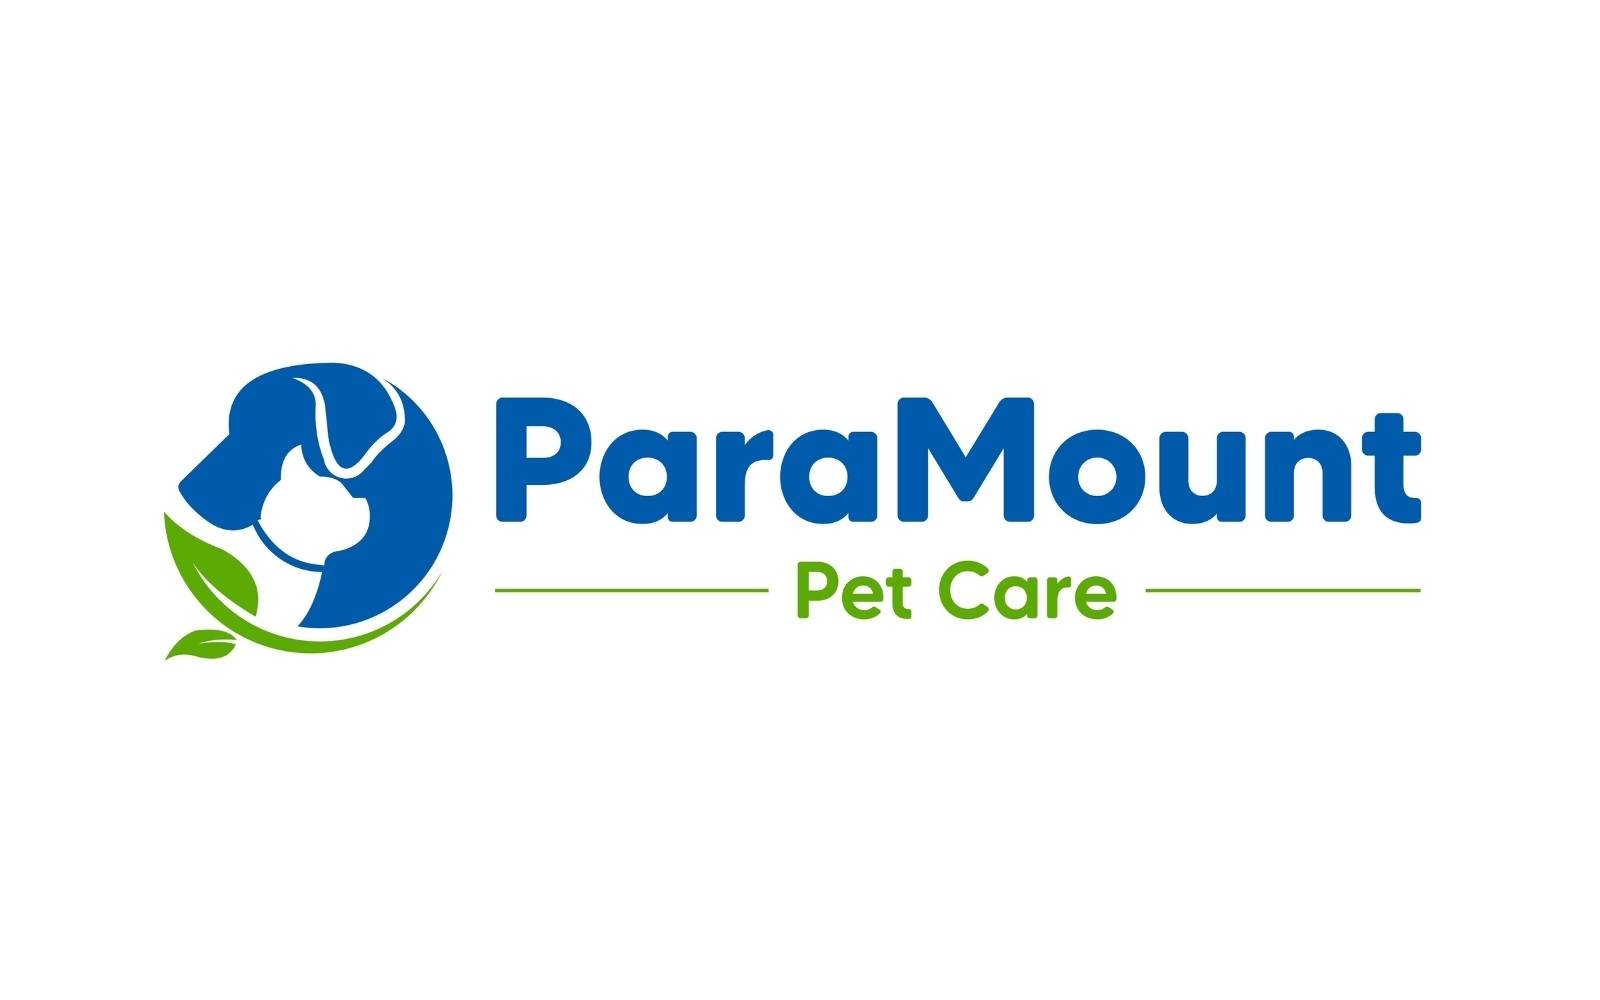 paramount-pet-care-logo-hd-summary.jpg